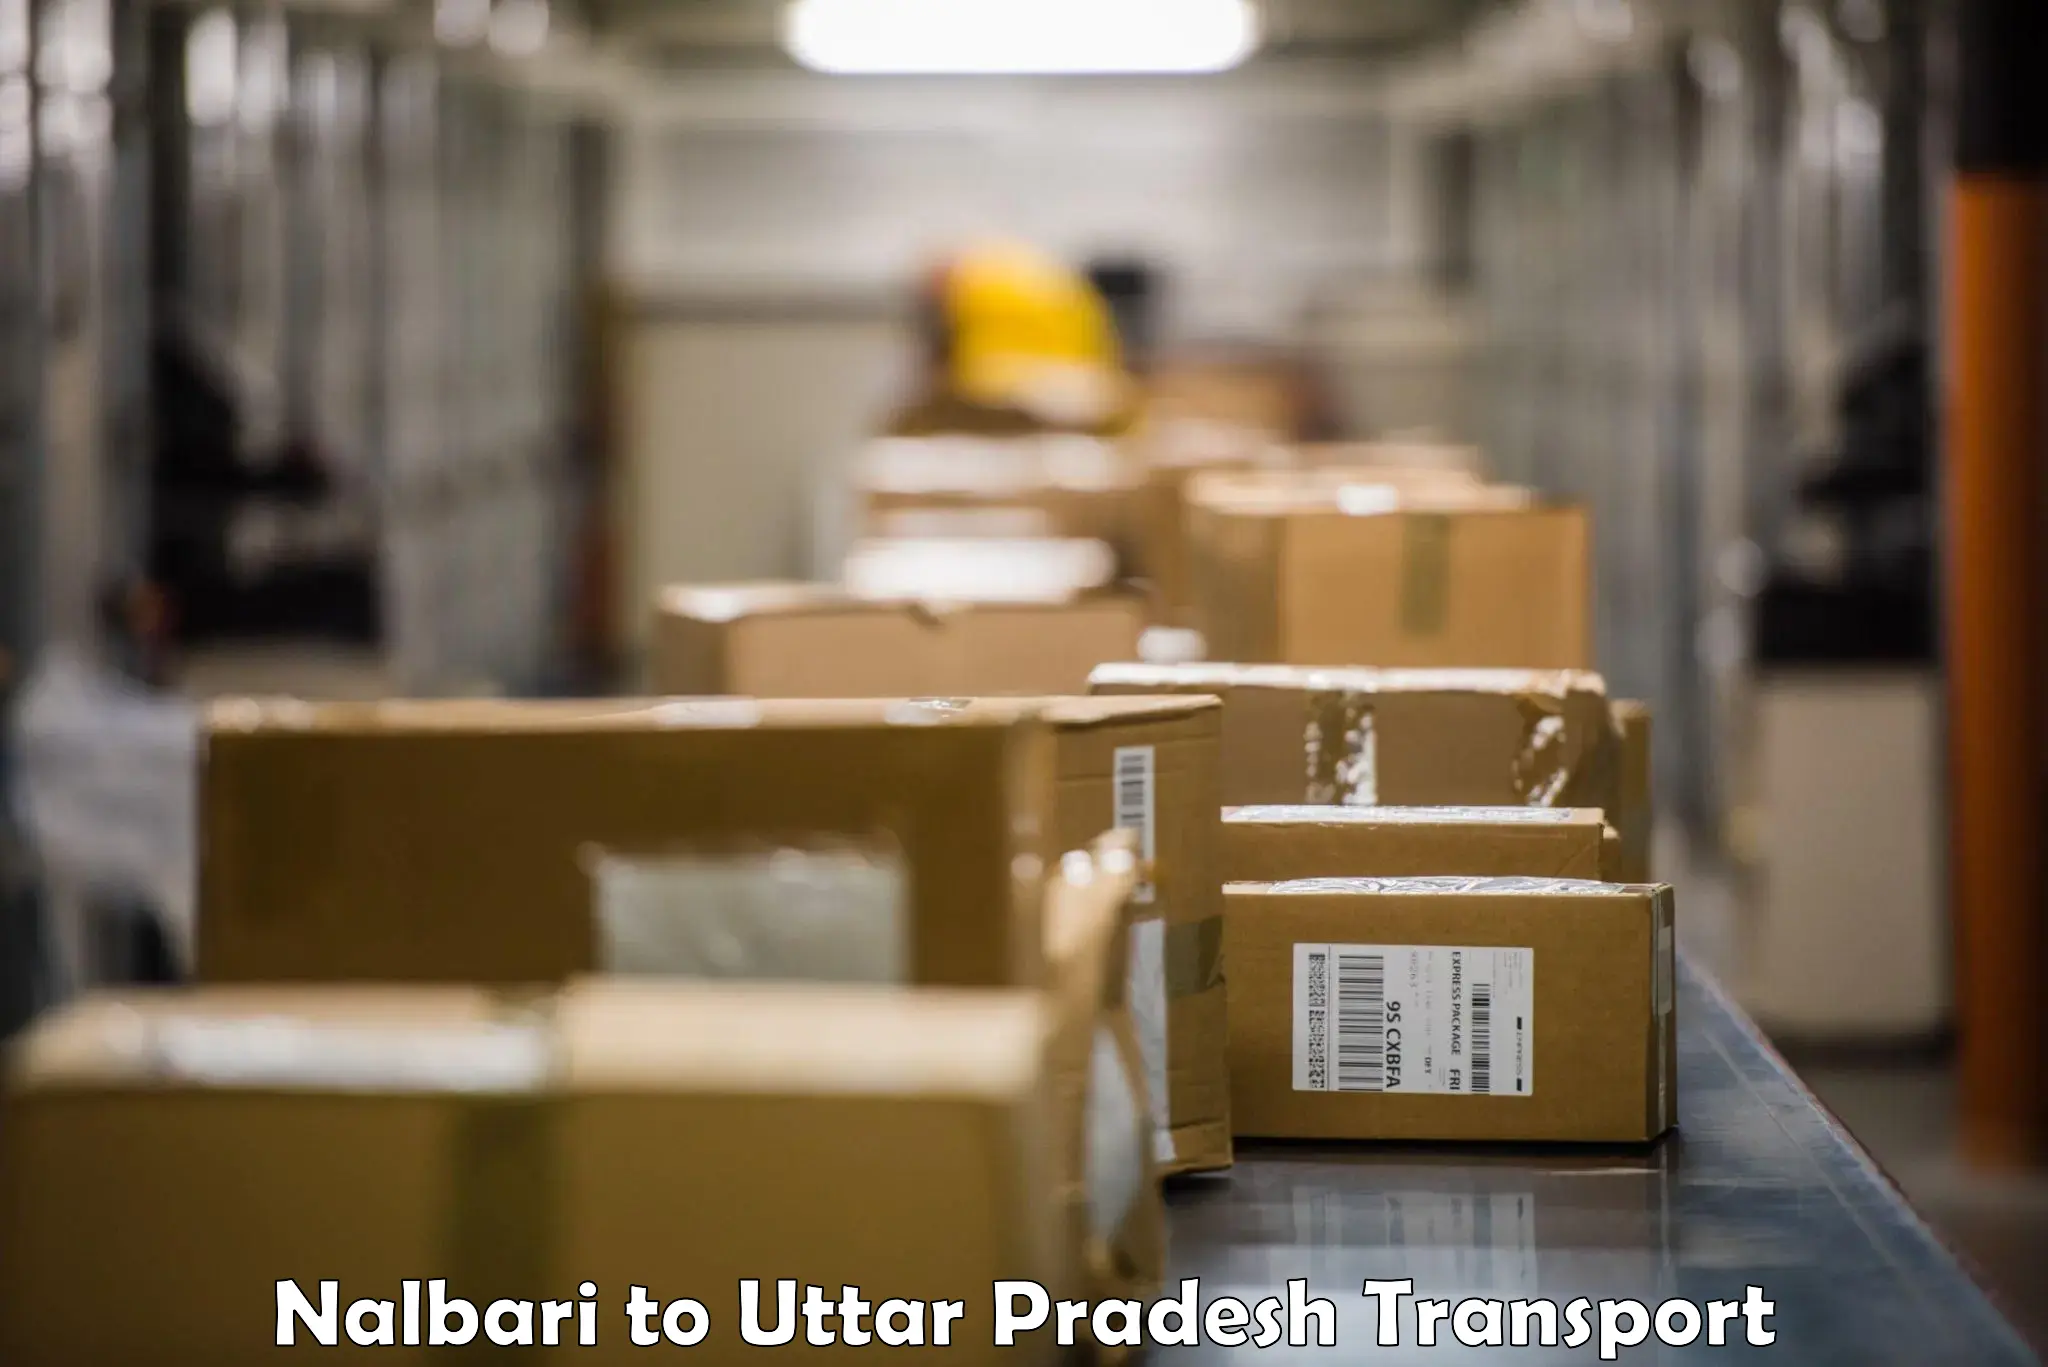 Goods delivery service Nalbari to Banda